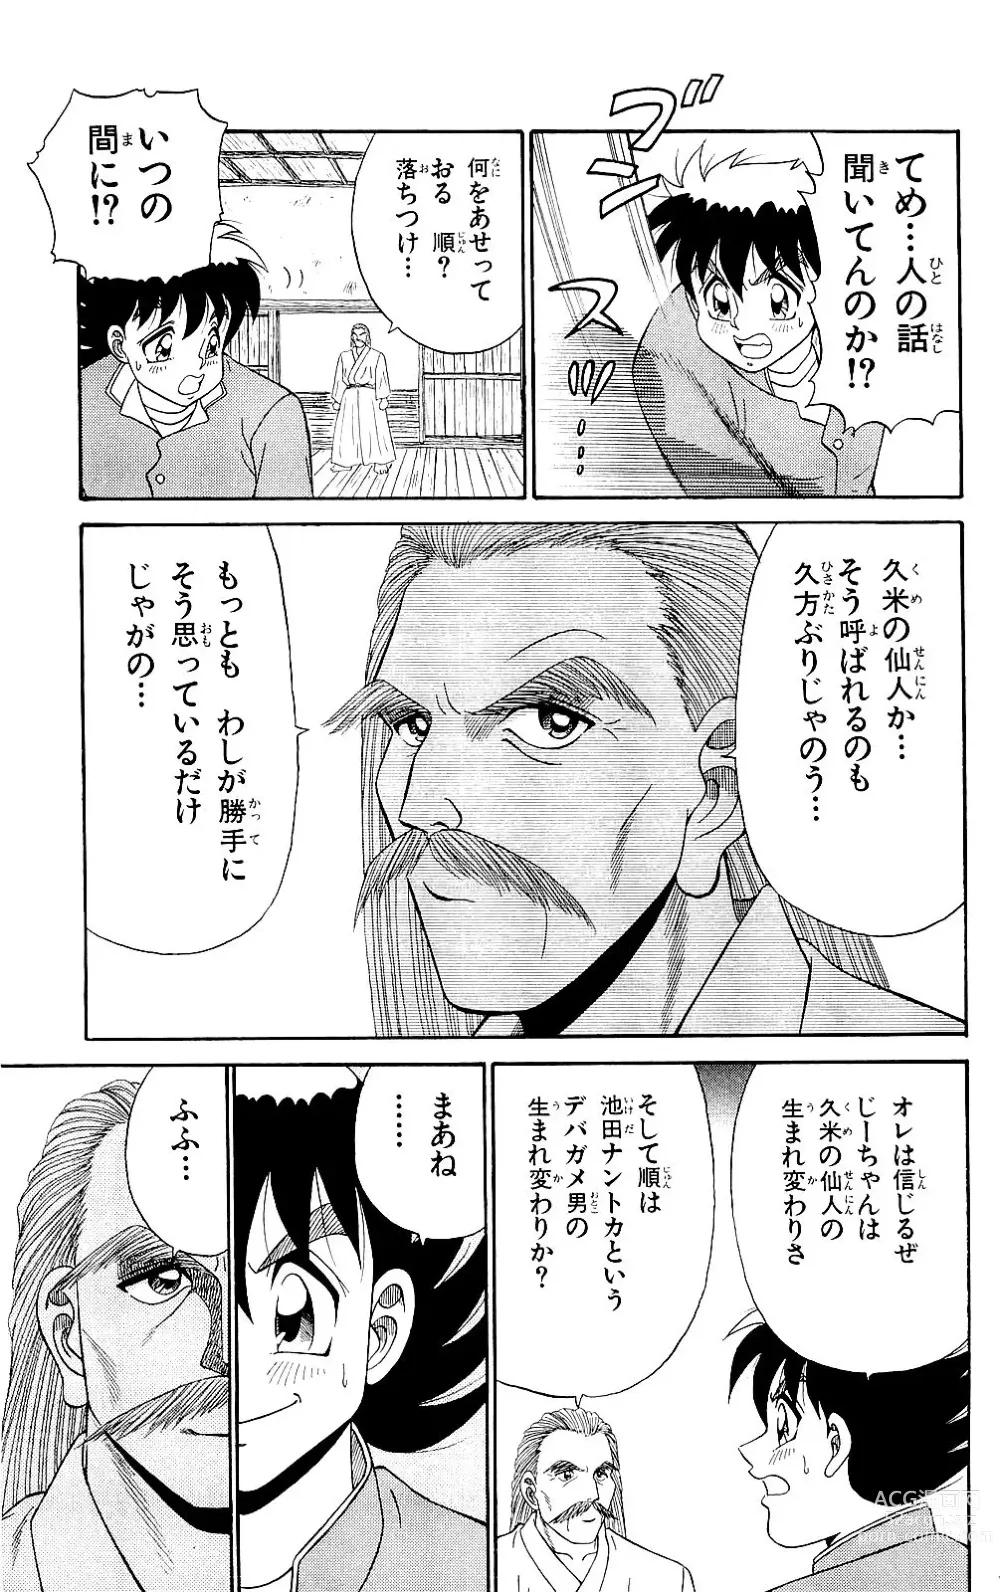 Page 183 of manga Orette Piyoritan 06